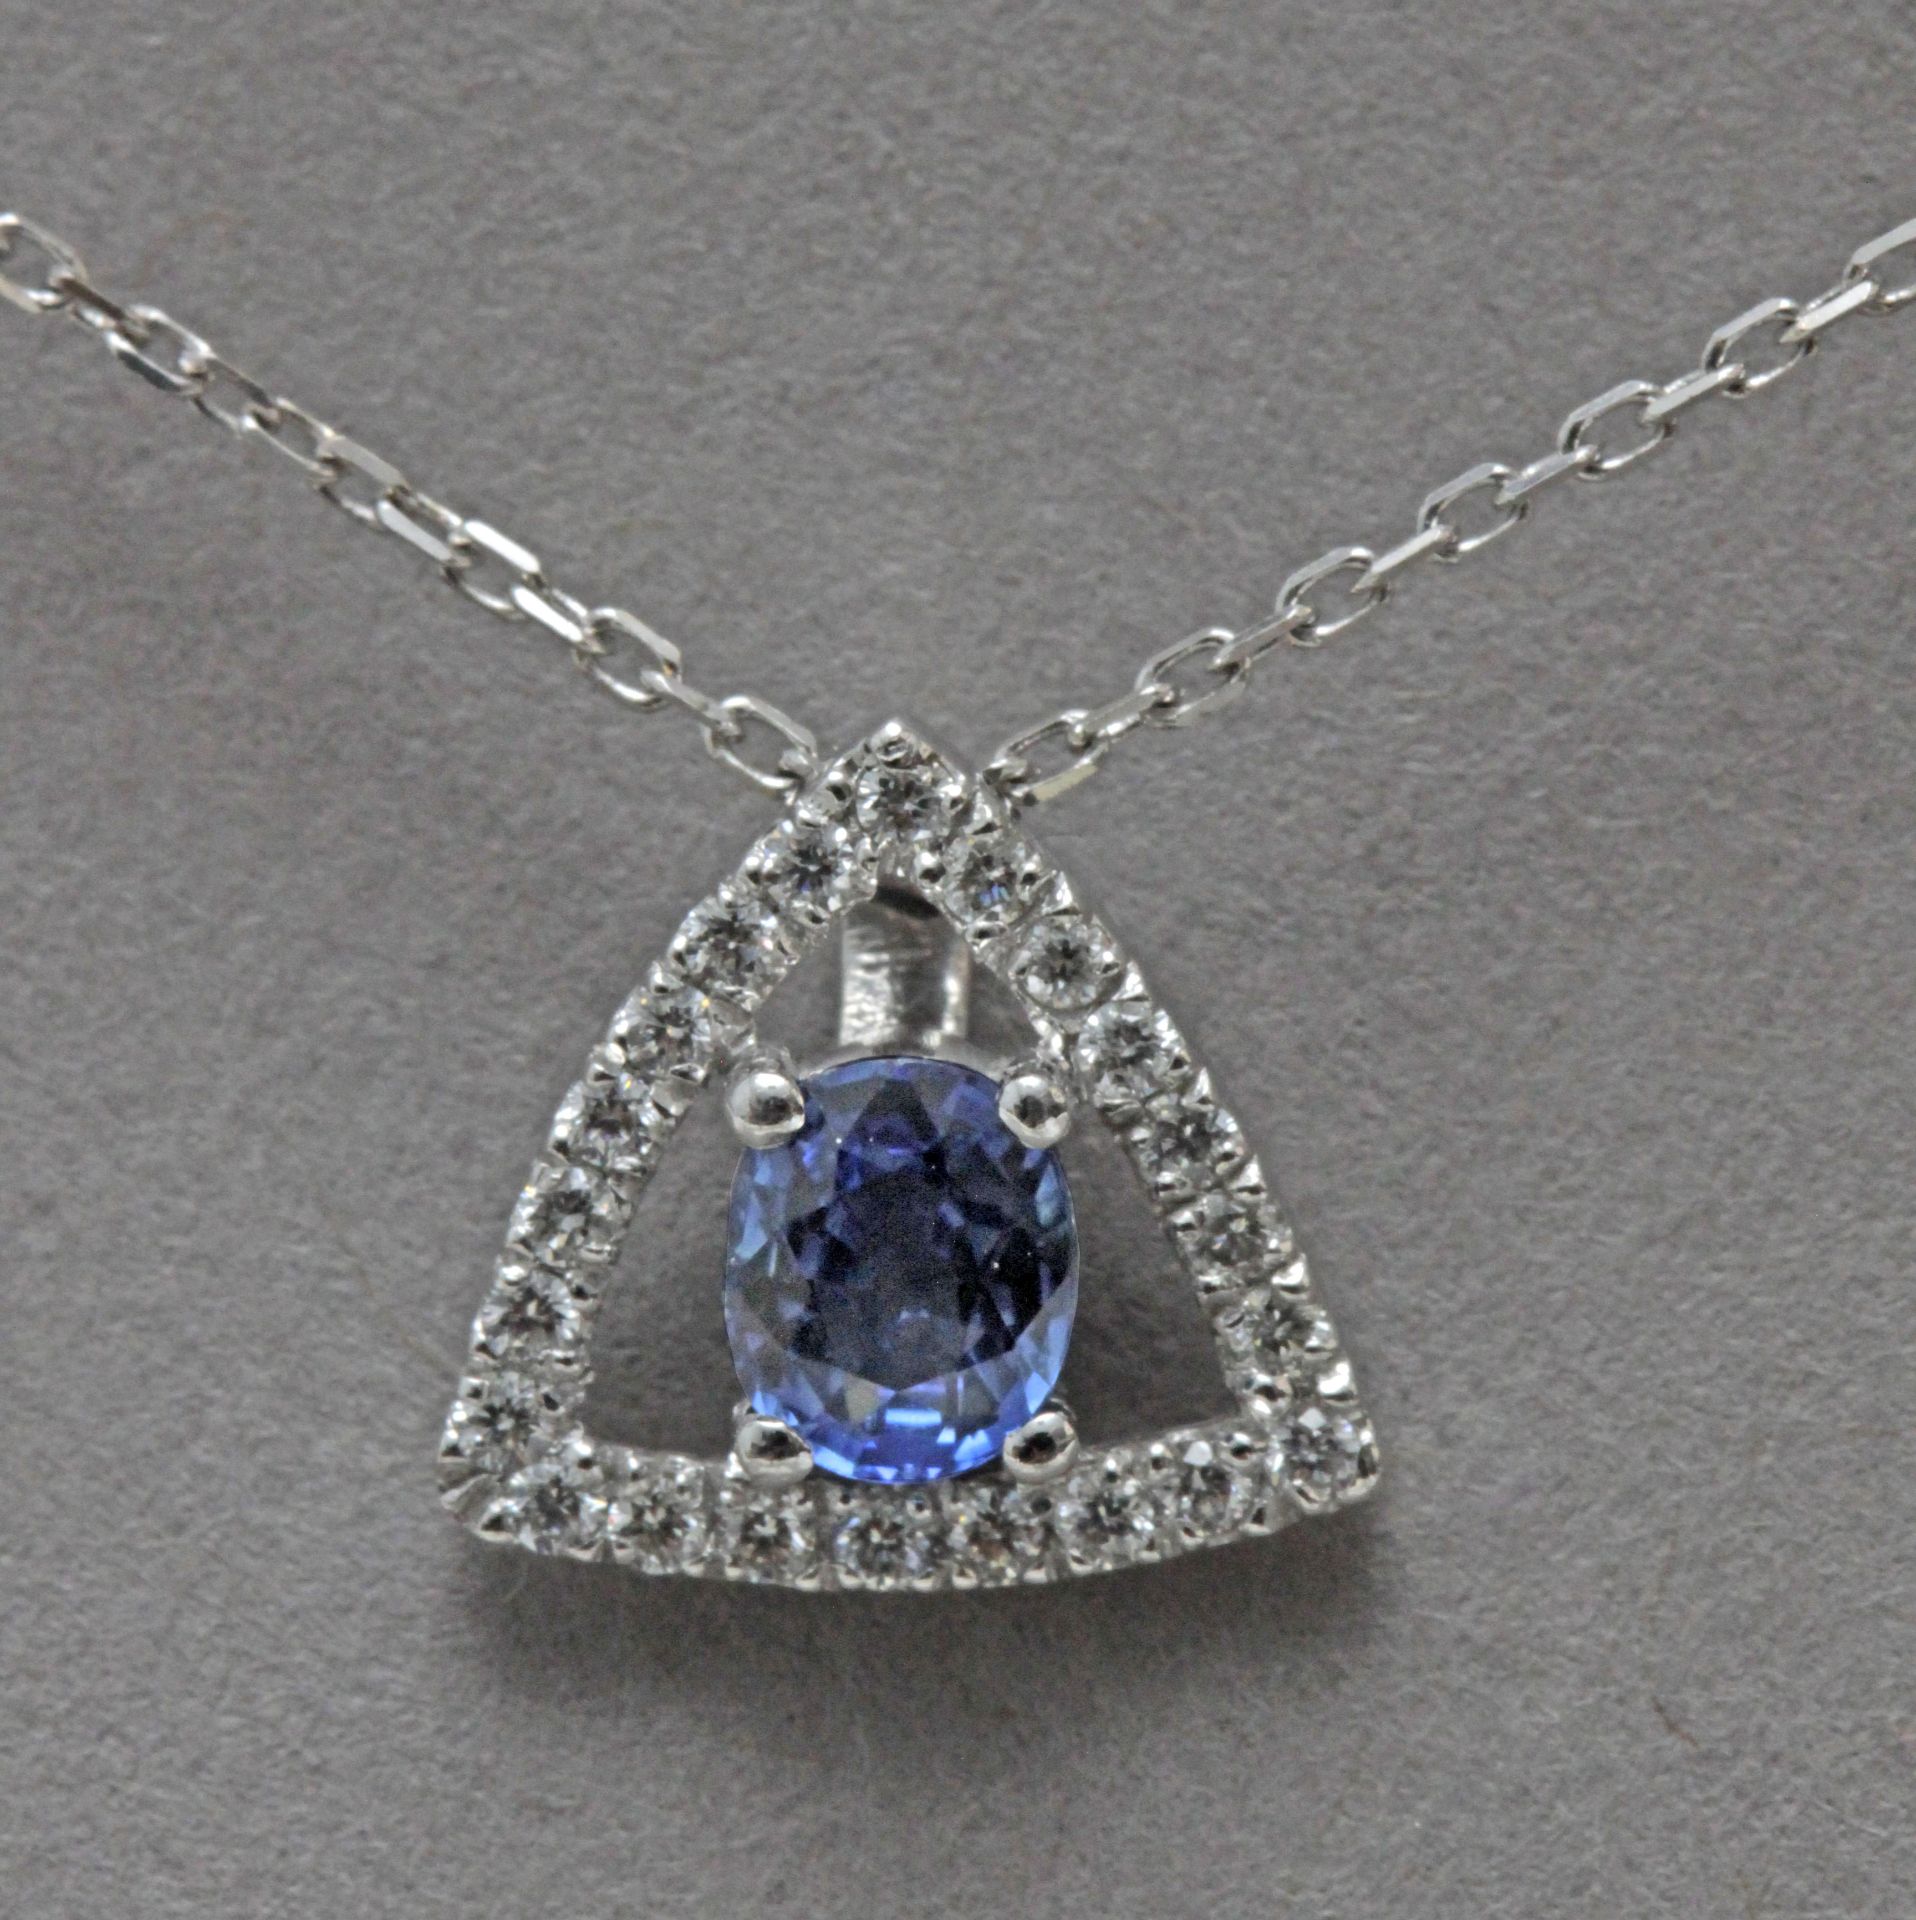 A sapphire and diamonds pendant